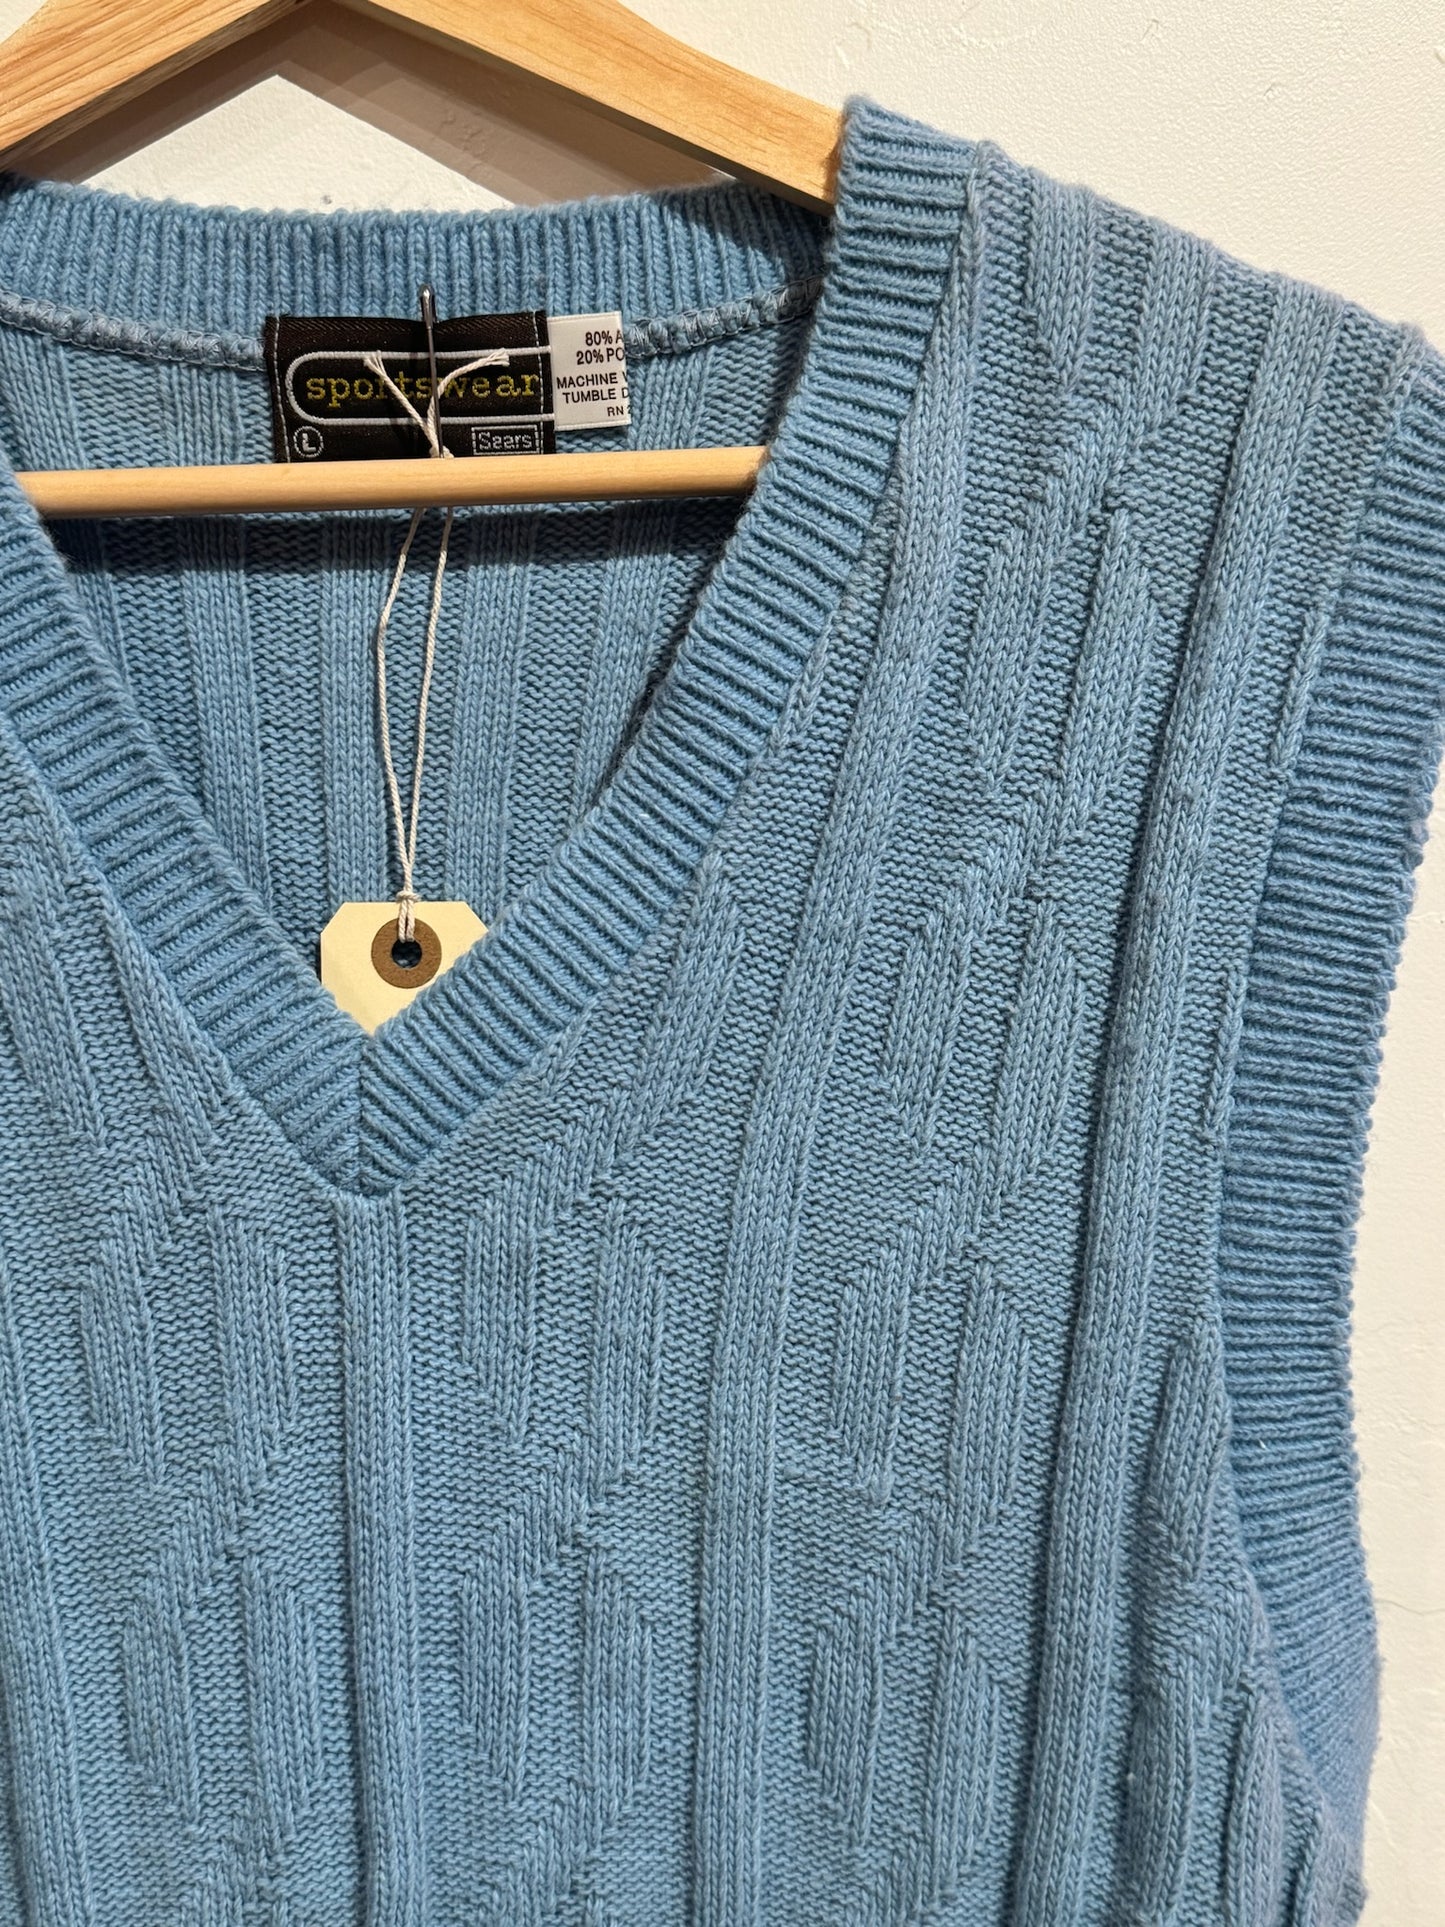 1970s Sears Sweater Vest